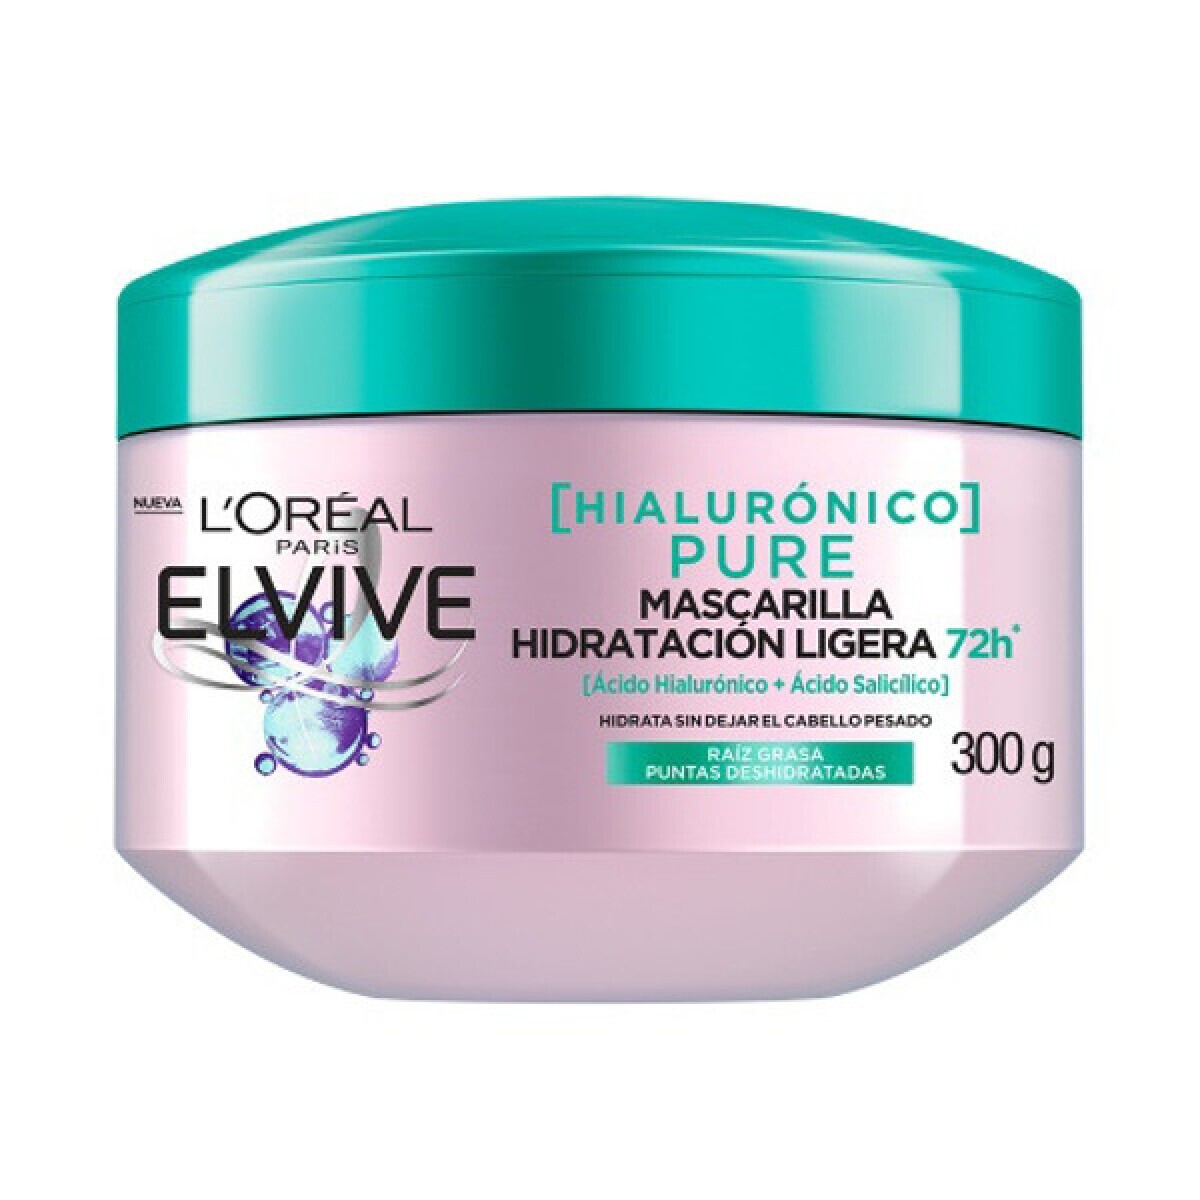 Elvive Crema TratamientoHa Pure 300g 